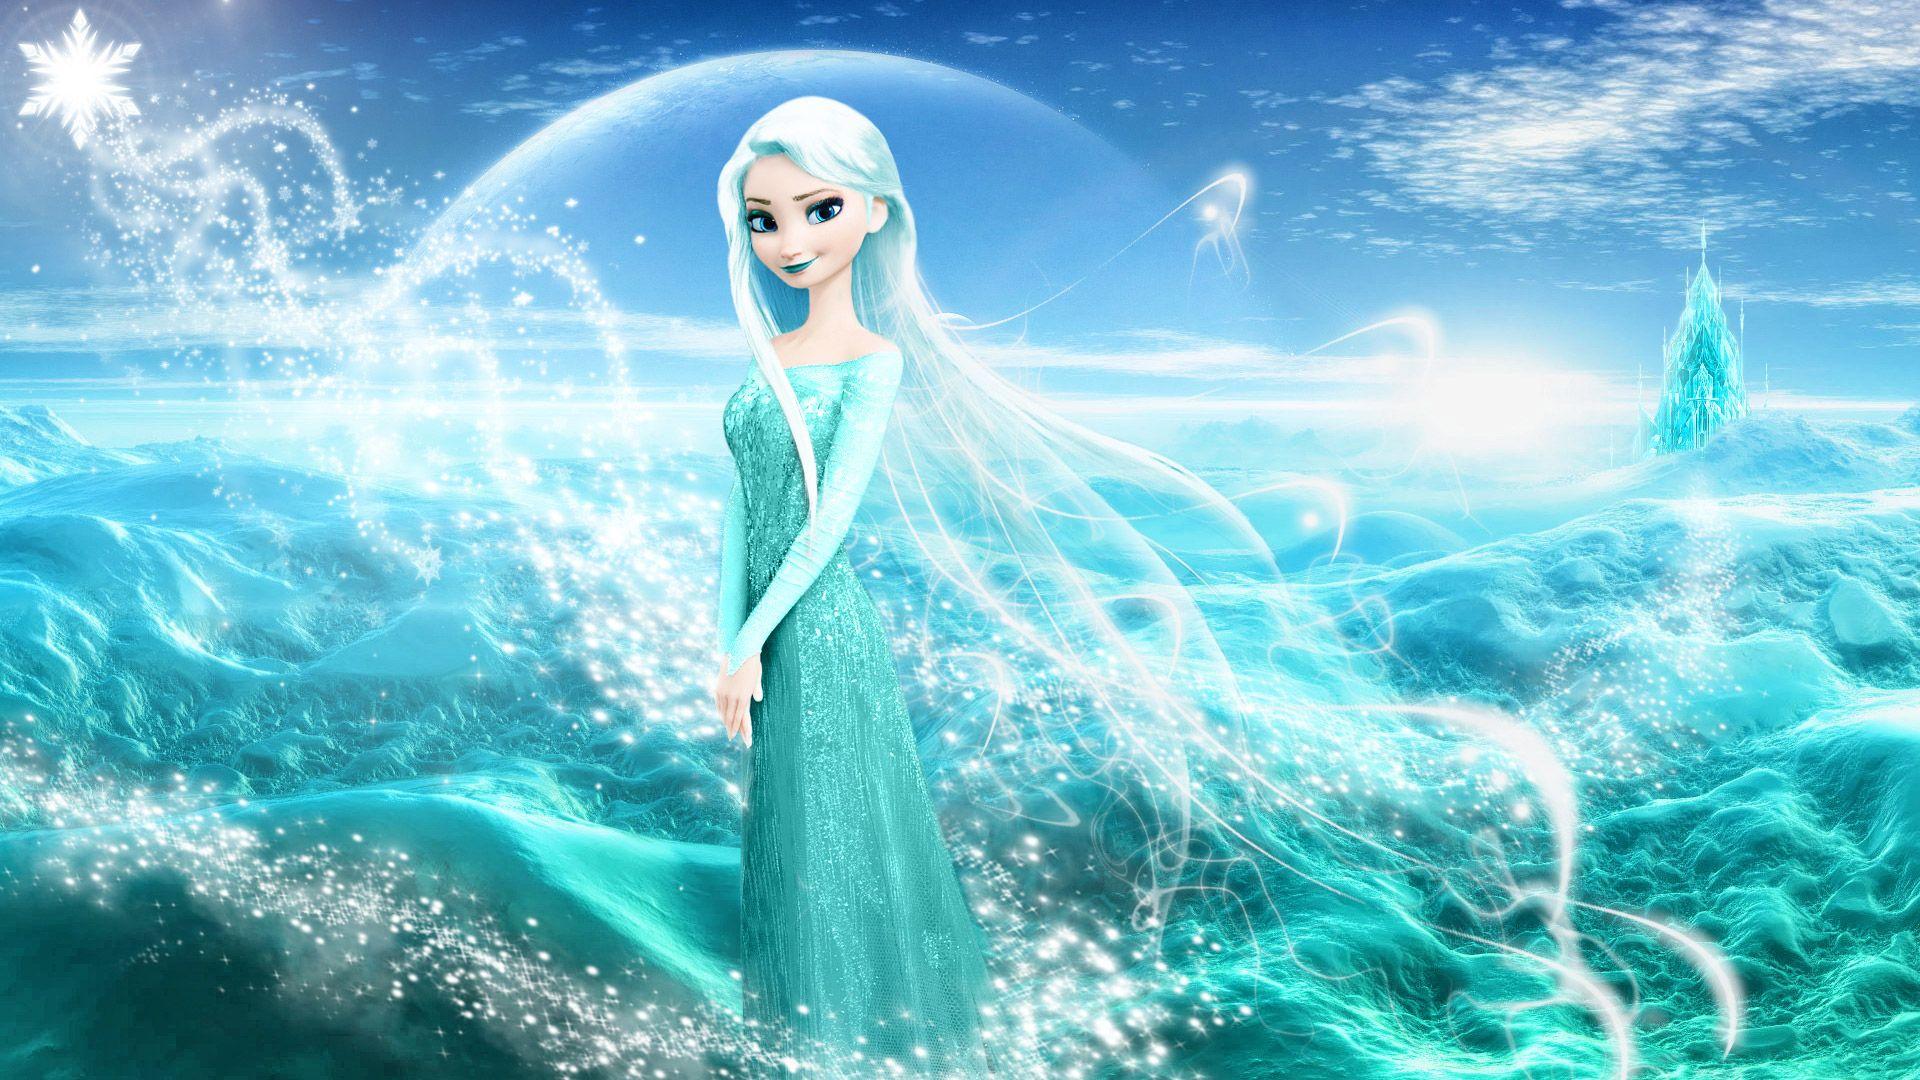 Elsa the Snow Queen image The Snow Queen HD wallpaper